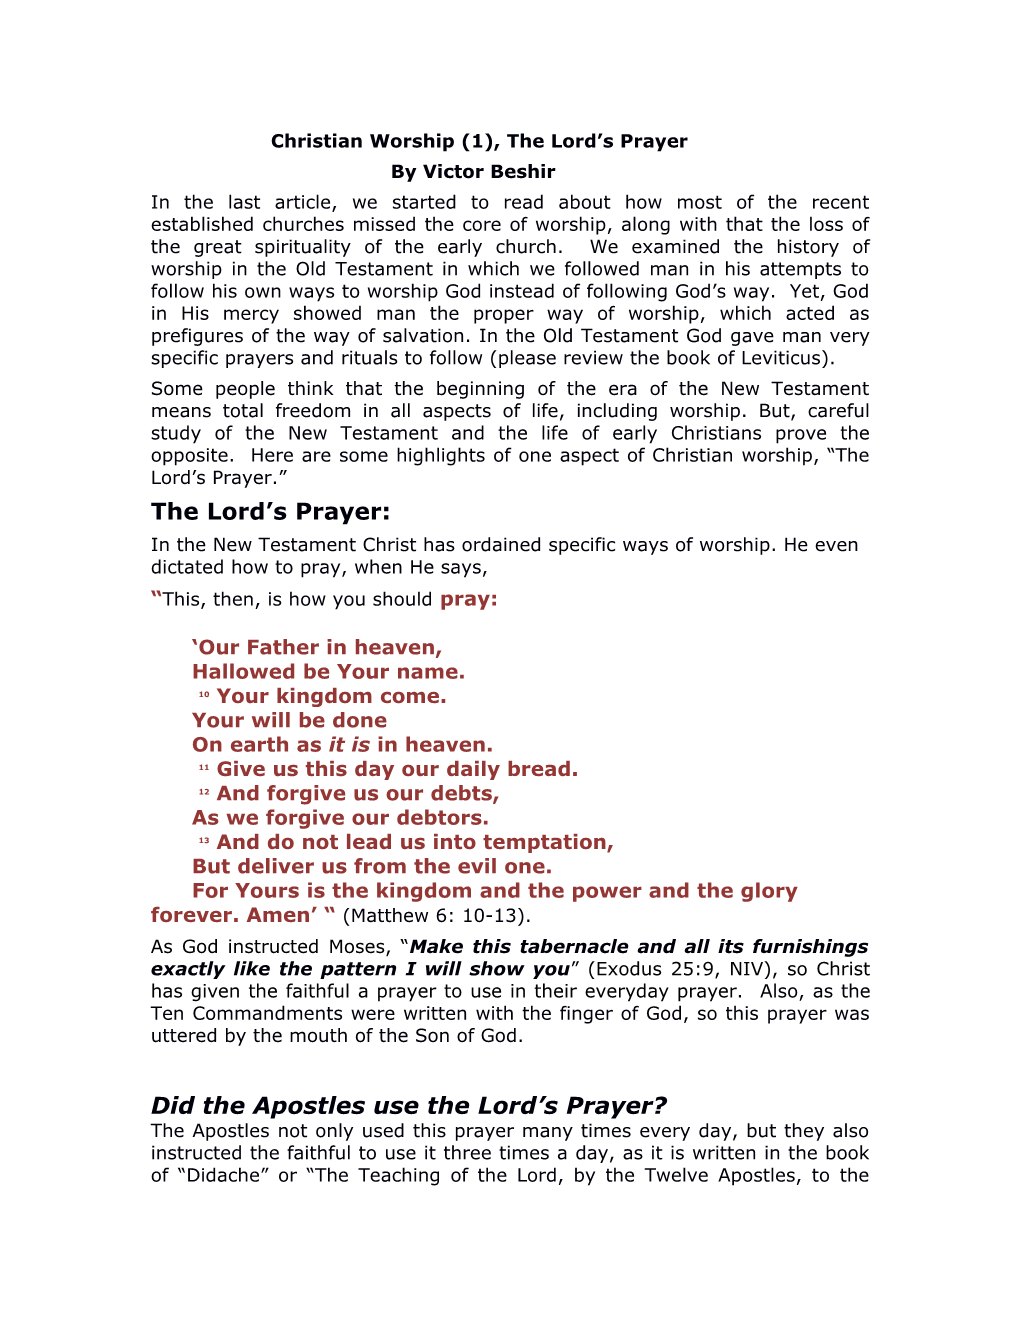 Christian Worship(1), the Lord S Prayer